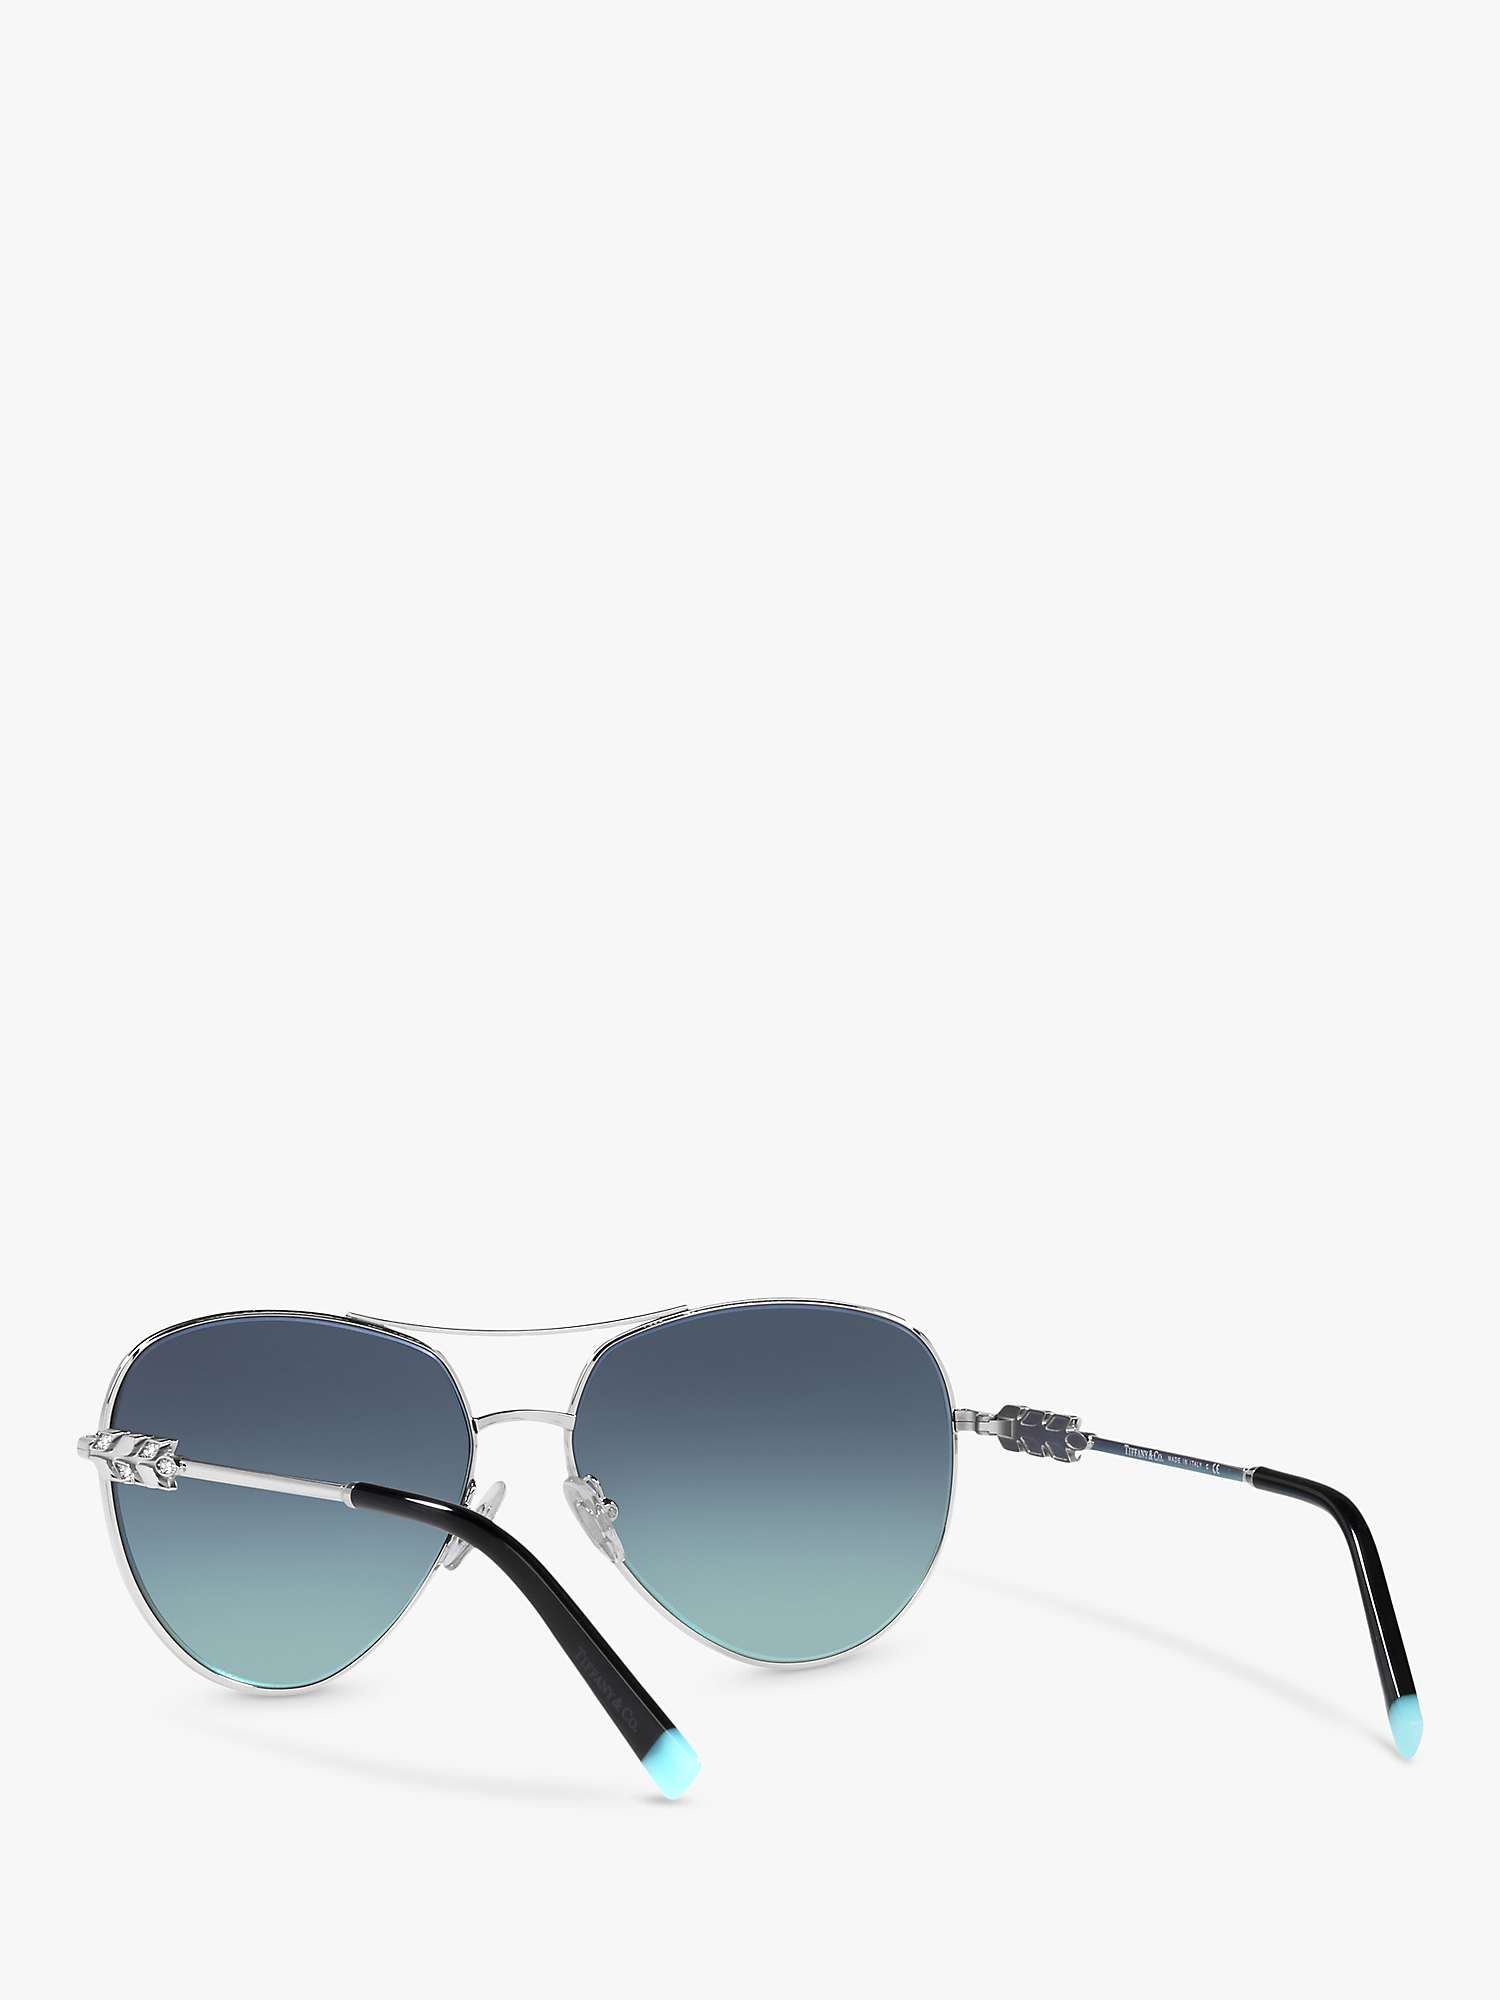 Buy Tiffany & Co TF3083B Women's Pilot Sunglasses, Silver/Blue Gradient Online at johnlewis.com